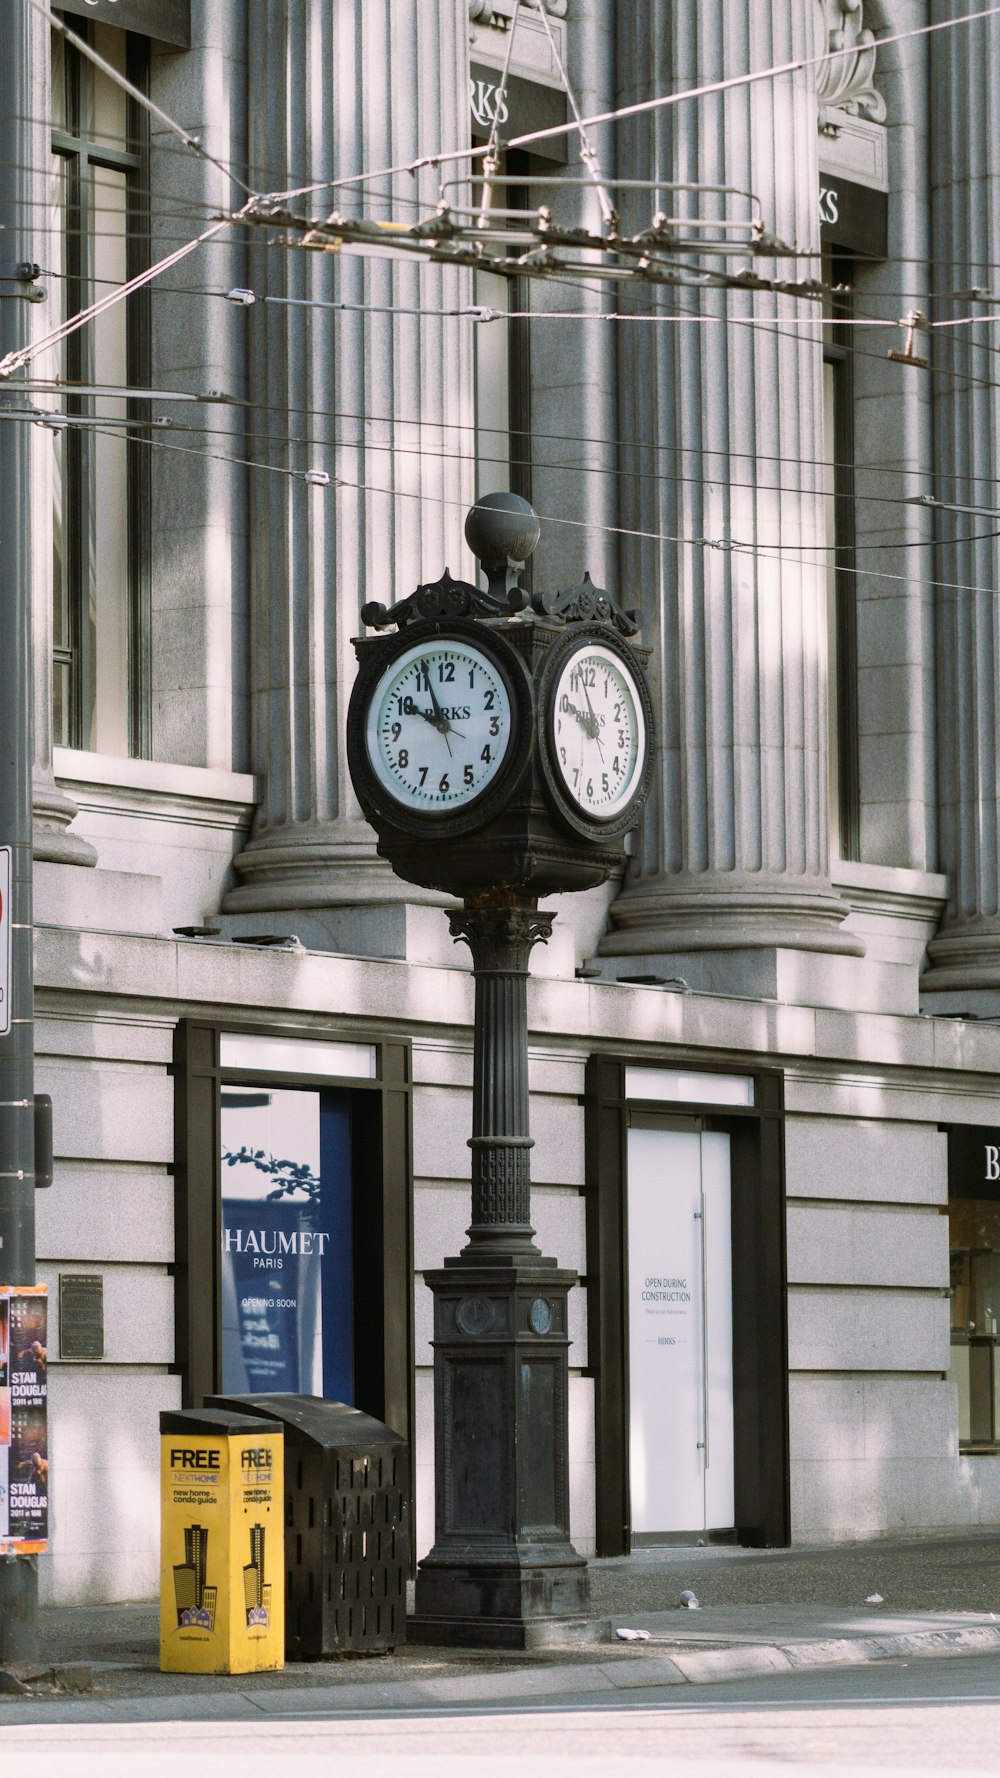 a clock on a pole